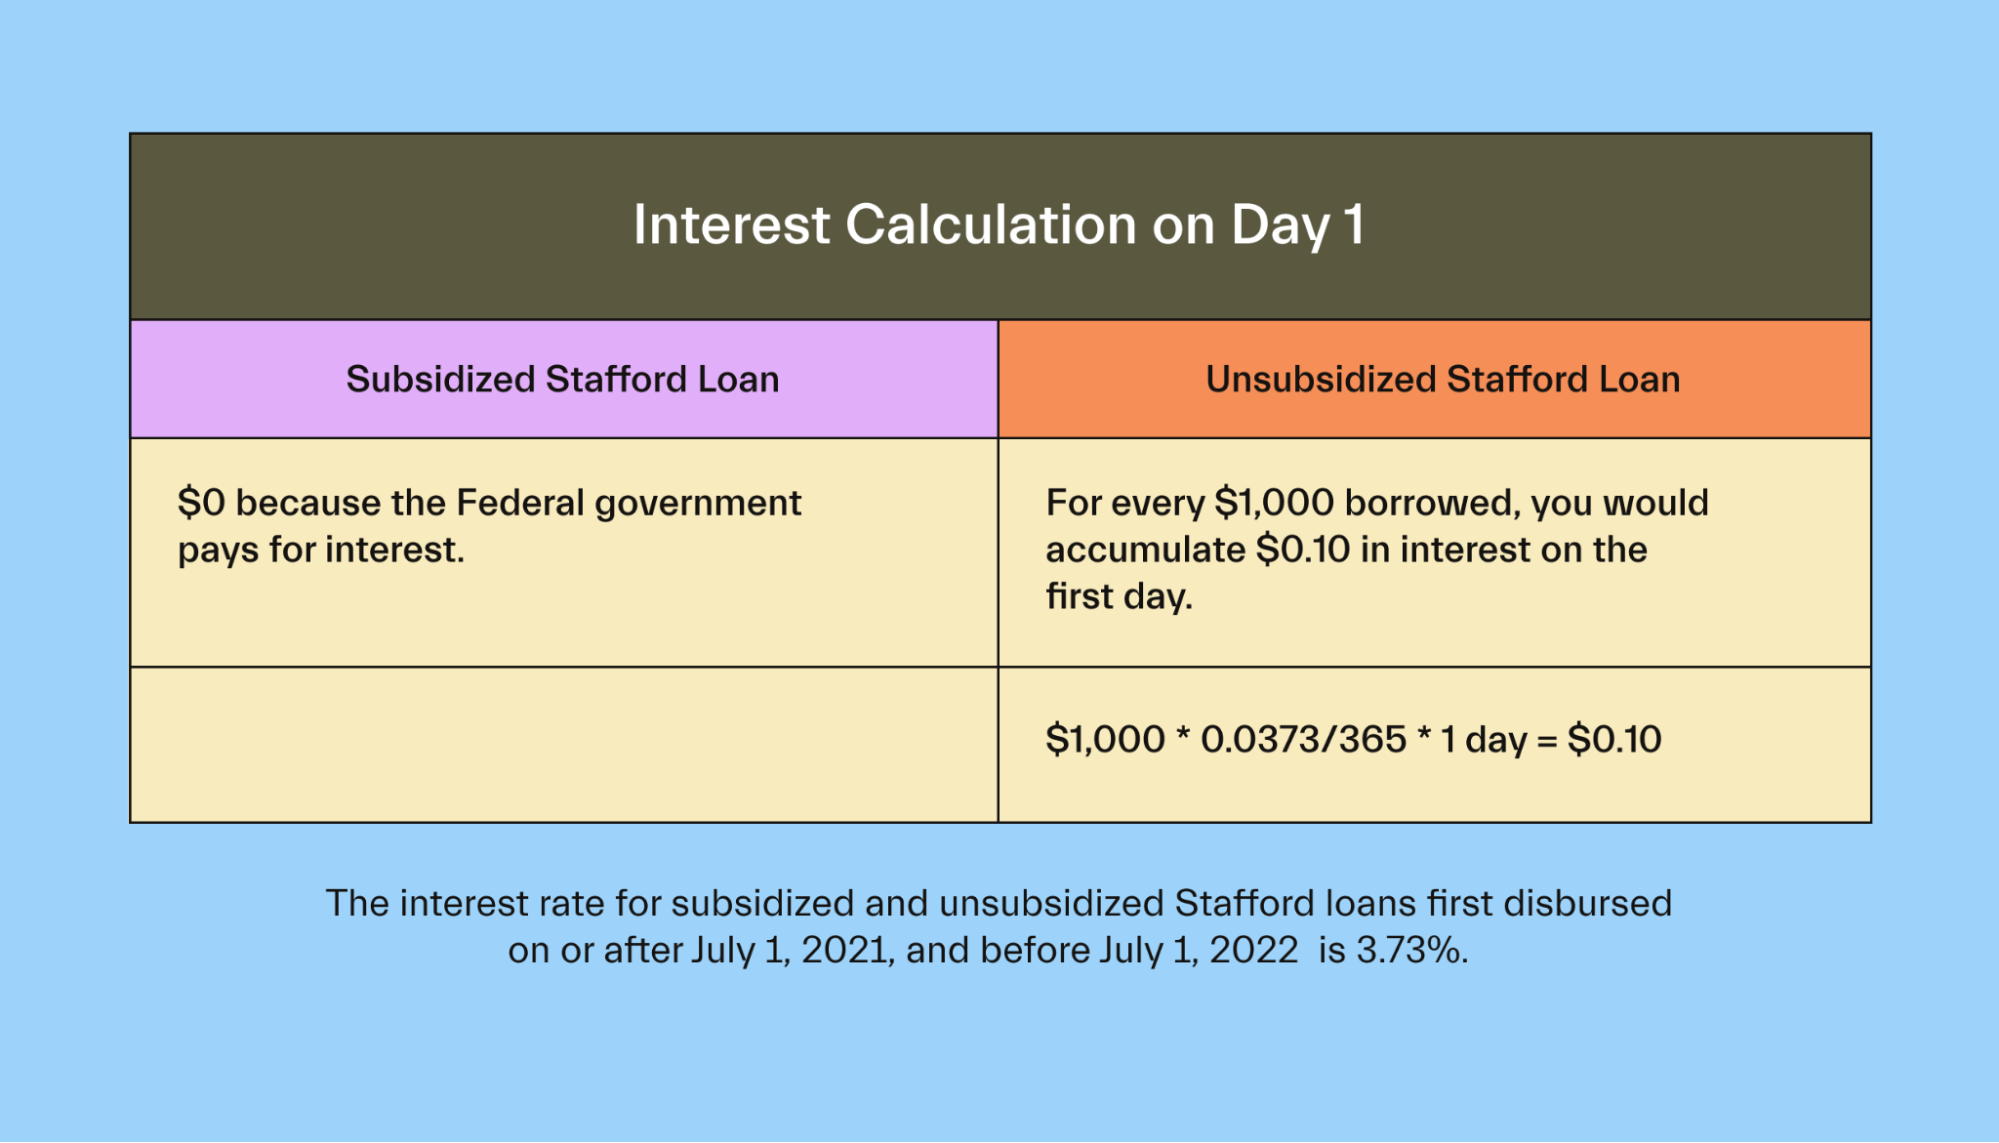 Interest in subsidized vs